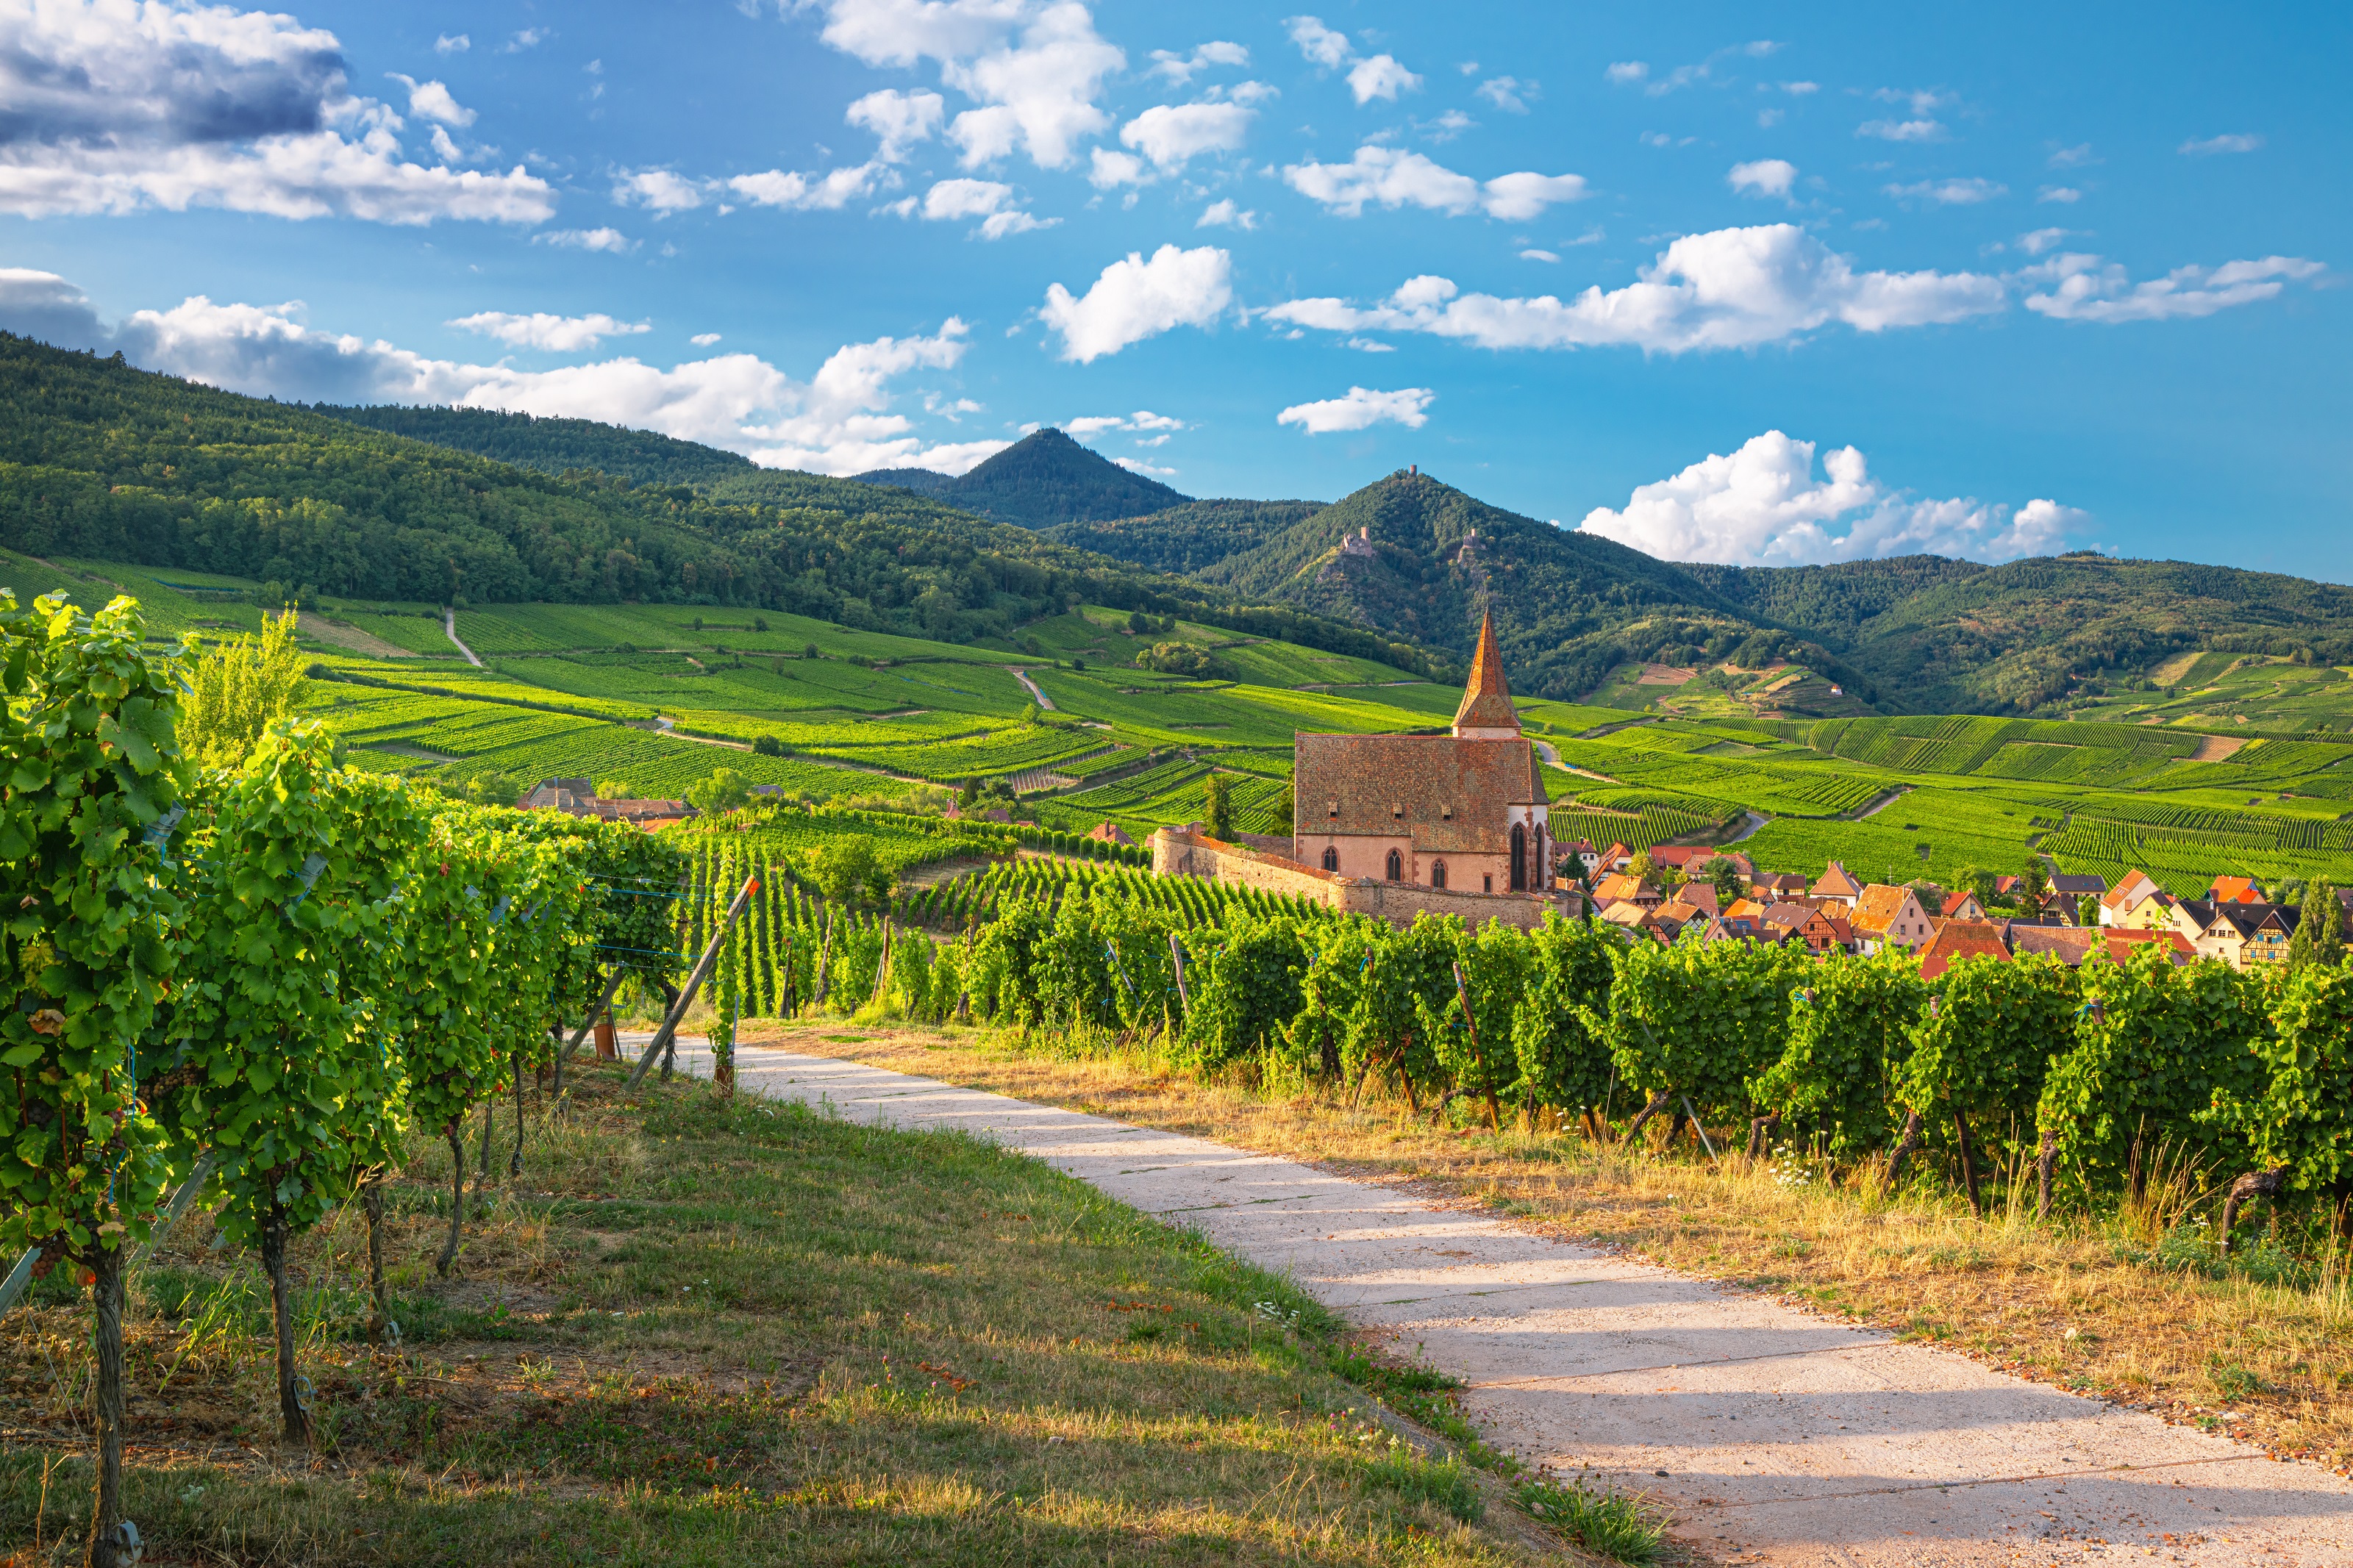 Alsace, the ideal destination for an off-season break